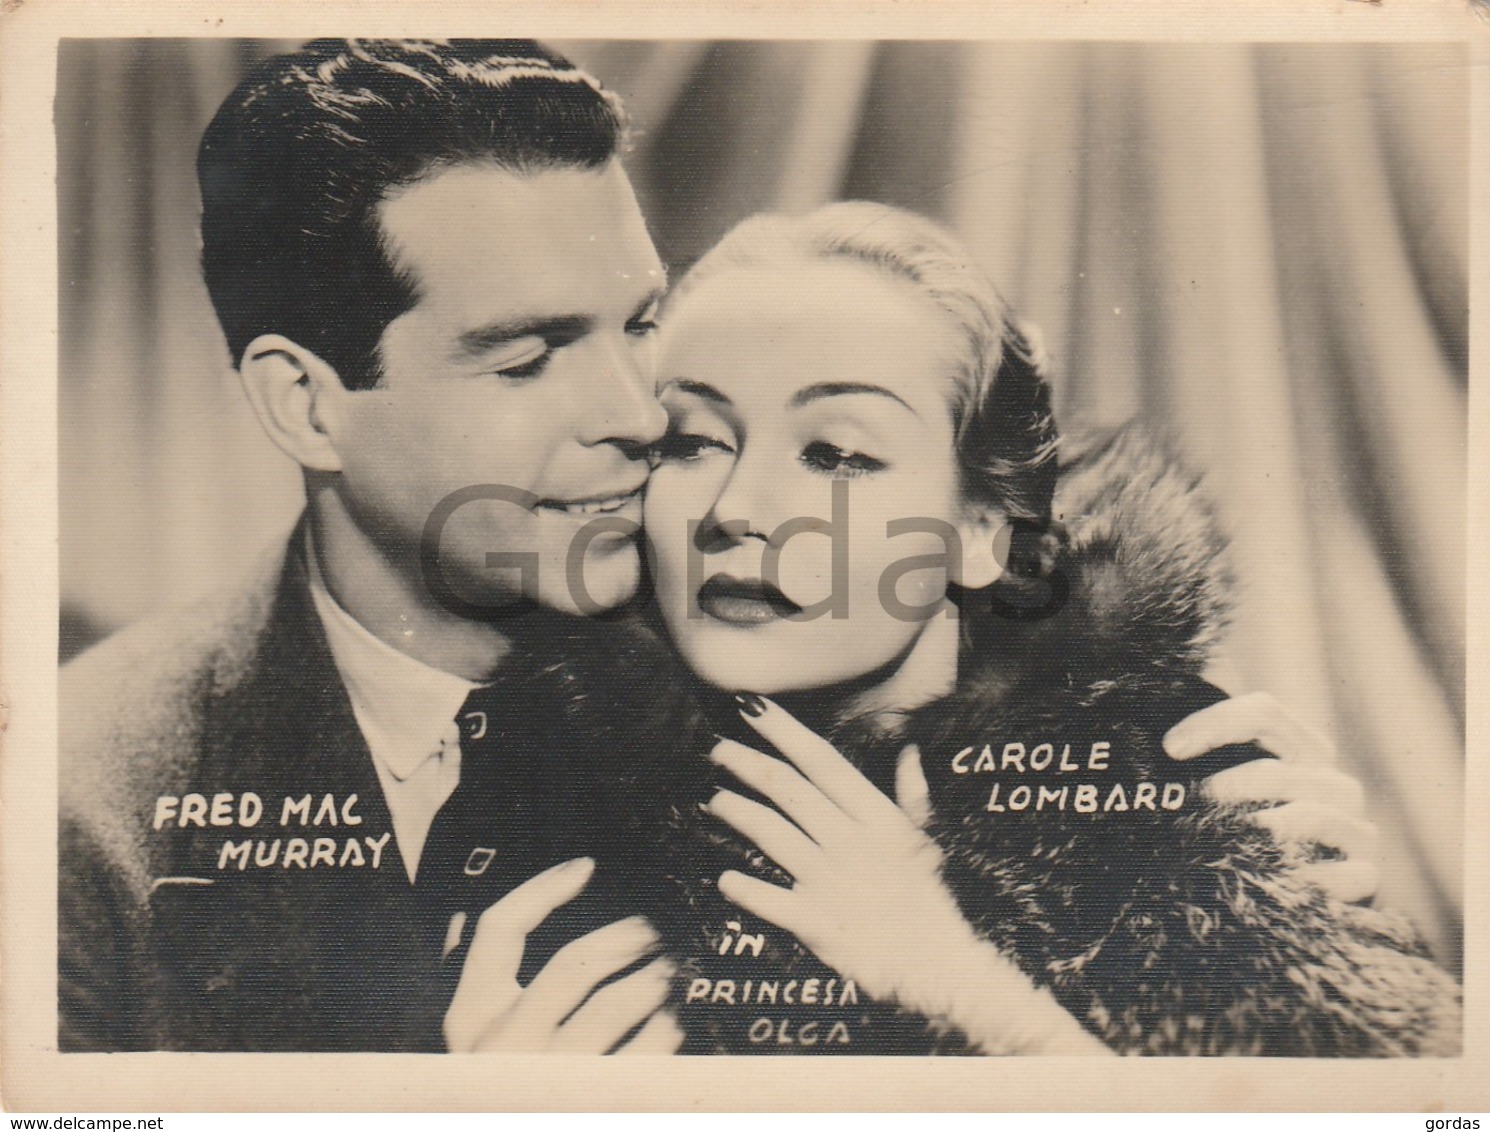 Fred Mac Murray - Carole Lombard - Actors - Movie "Princess Olga" - Photo 120x90mm - Famous People